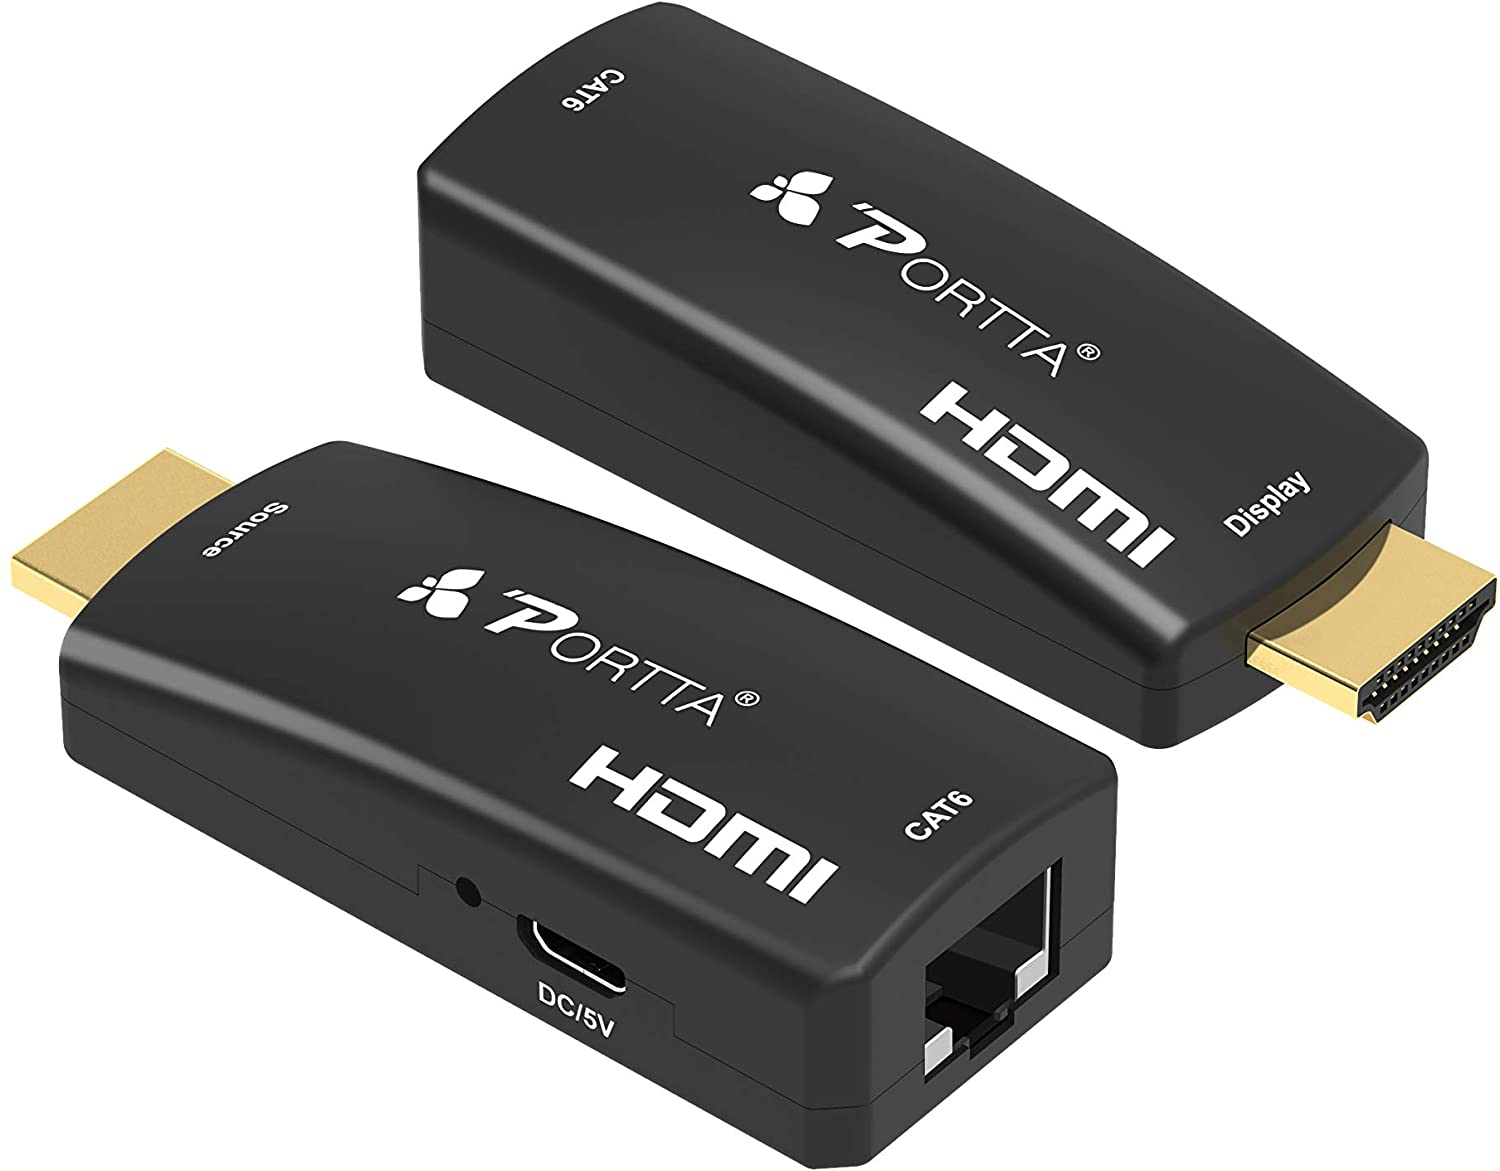 HDMIエクステンダー HDMI延長器USB給電 HDMI送信機と受信機 | パンダスタジオ・レンタル公式サイト